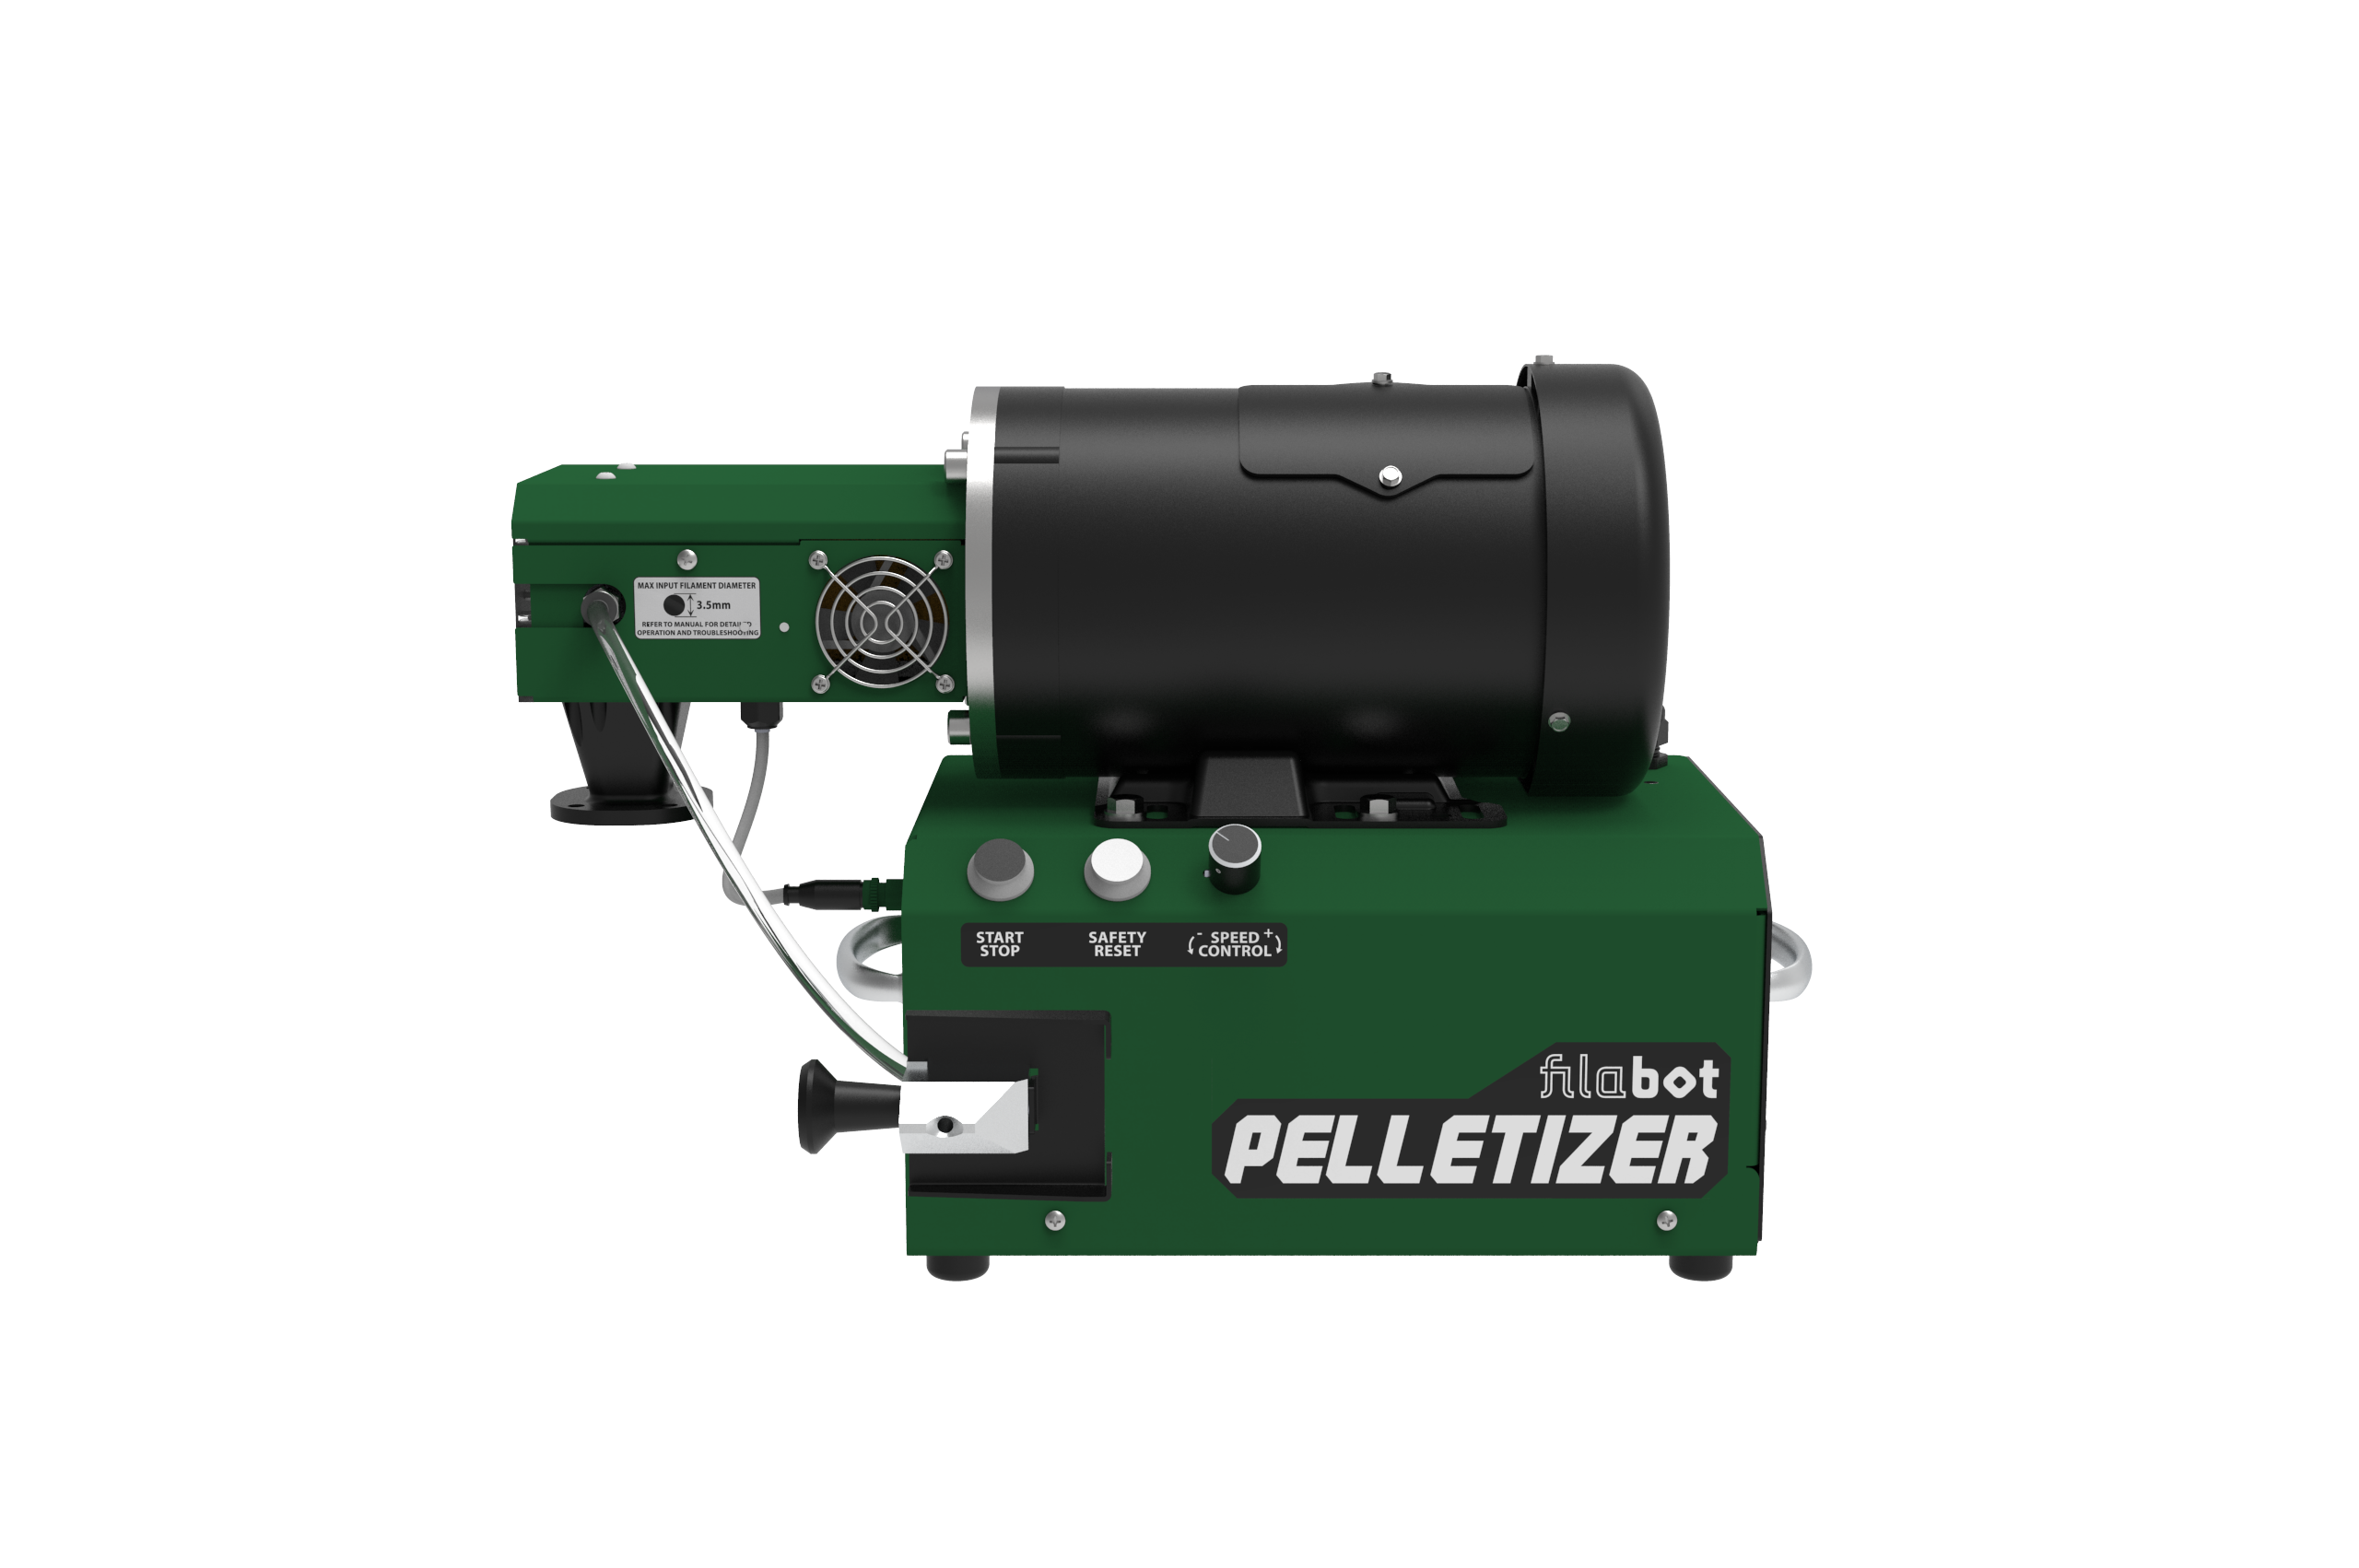 Pelletizer - High Speed Filament Cutting